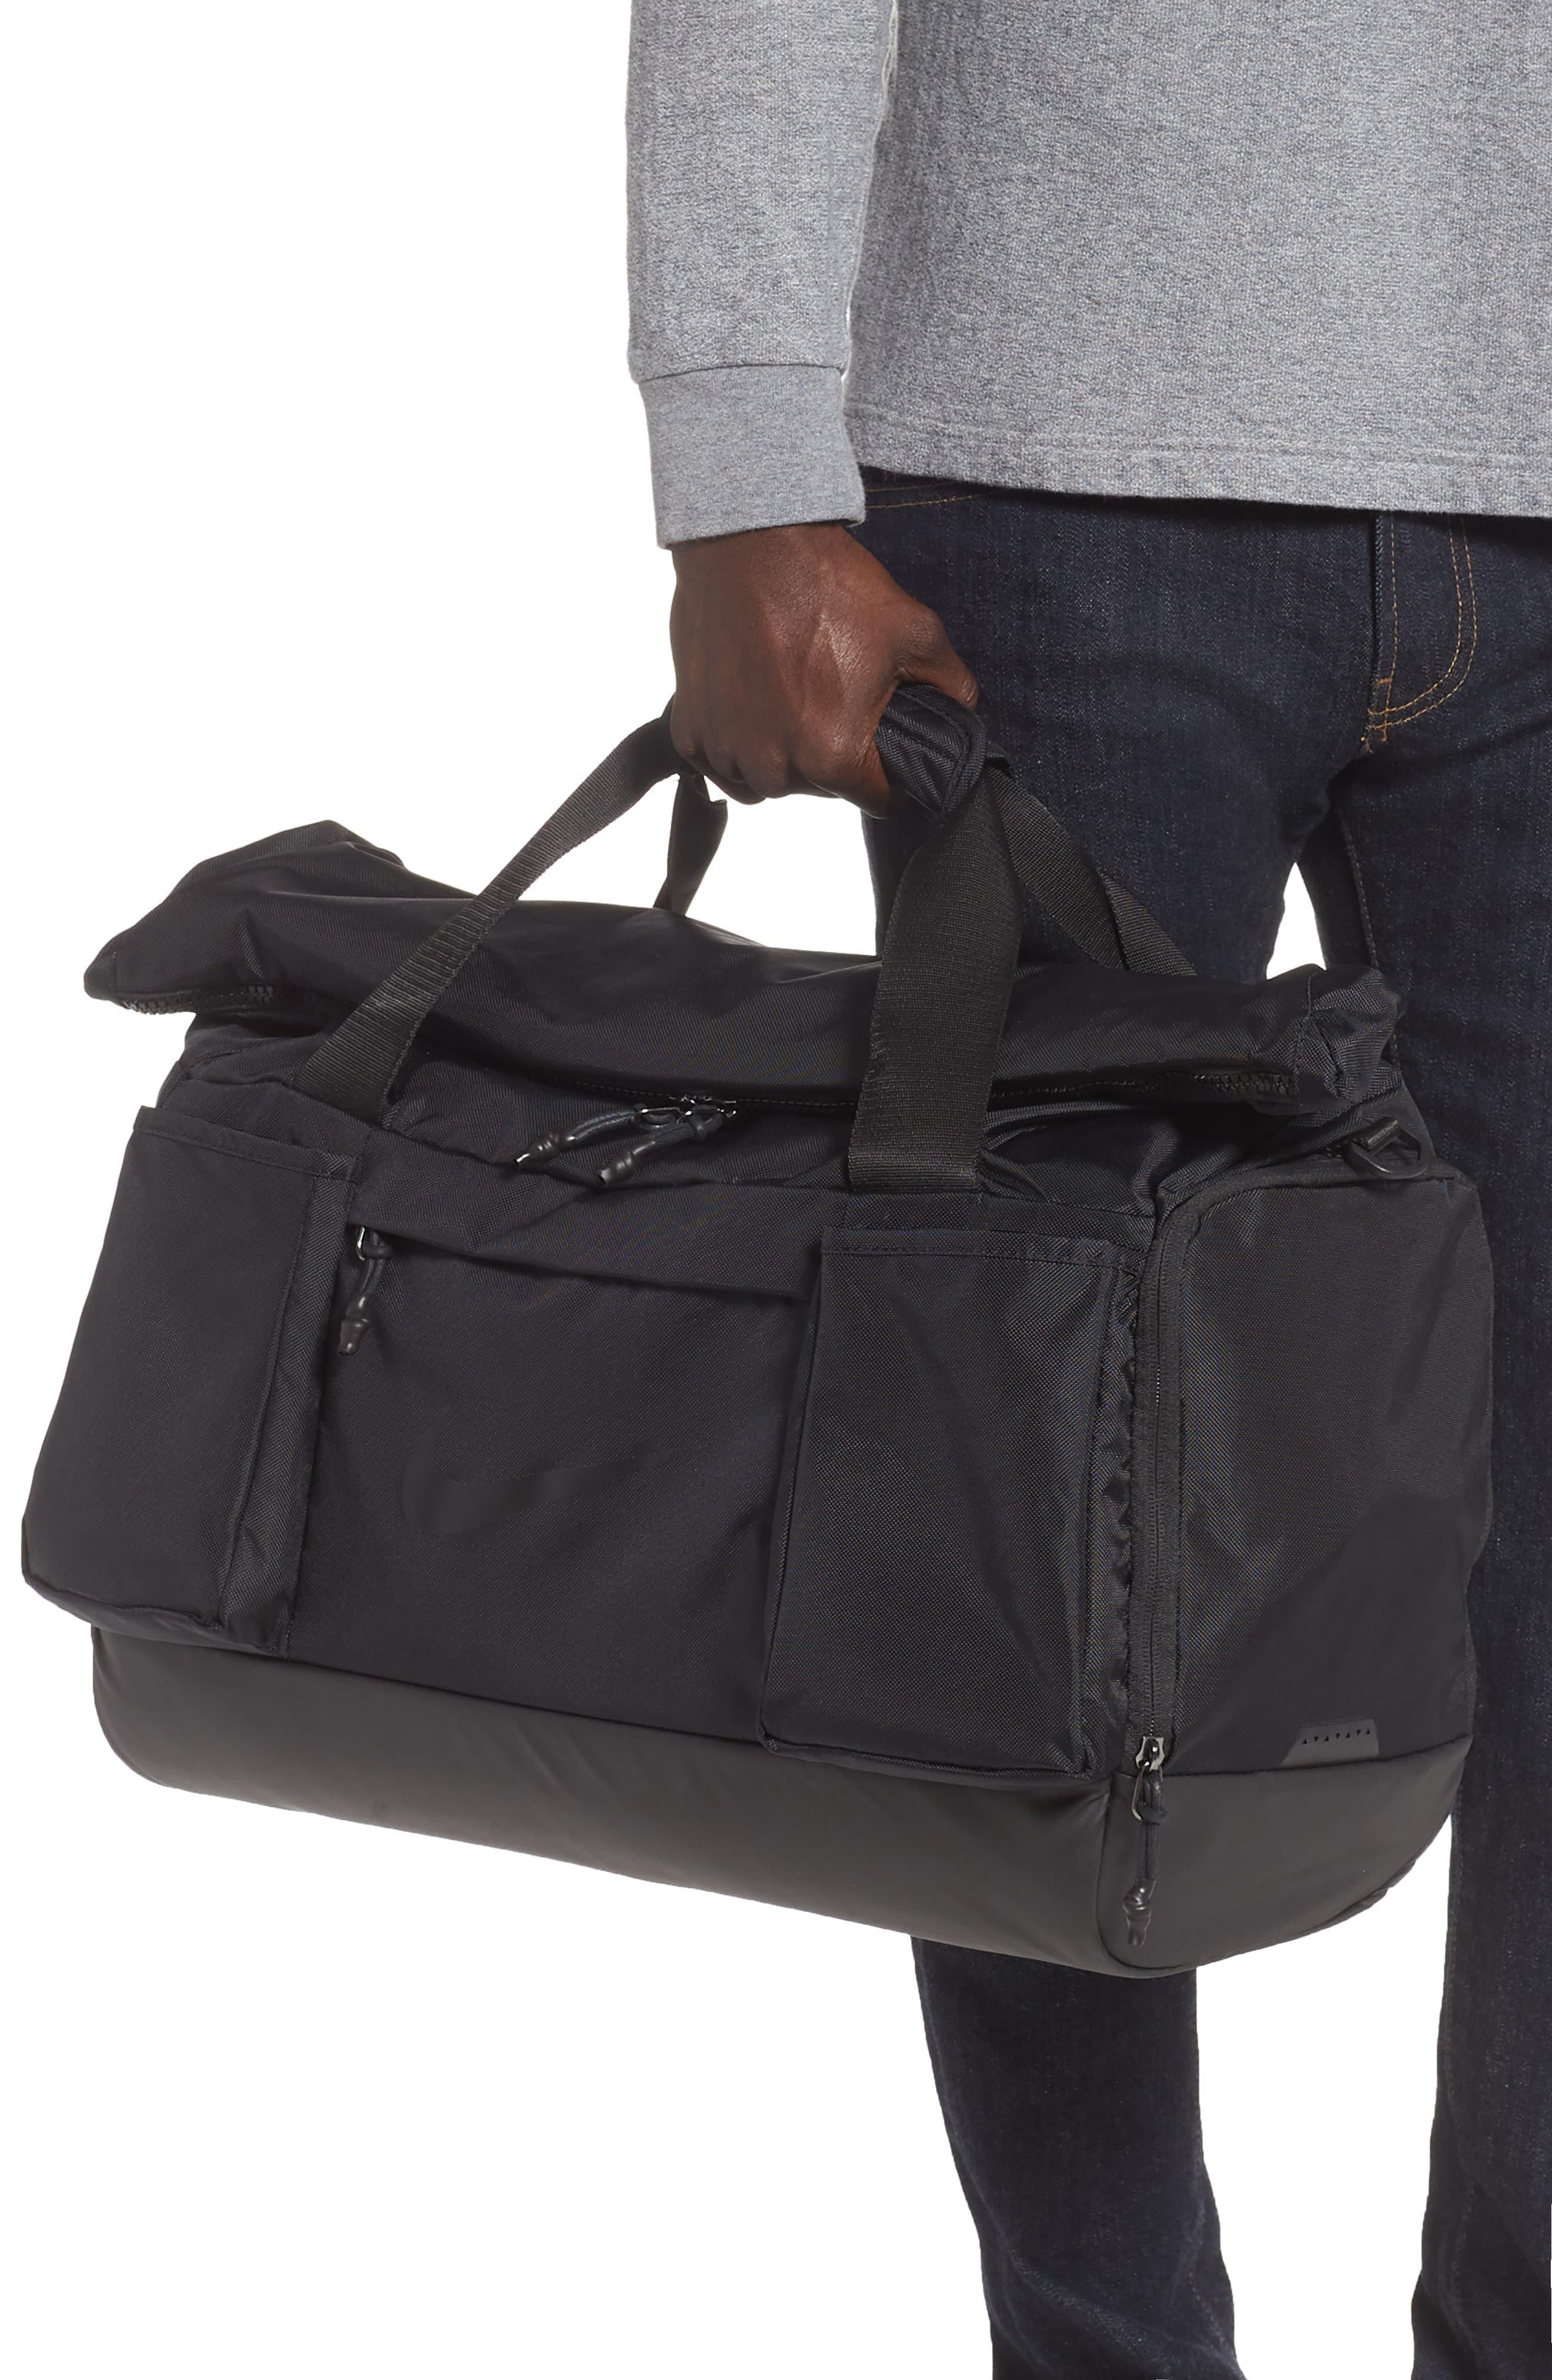 Nike Vapor Speed Duffle Bag in Black 